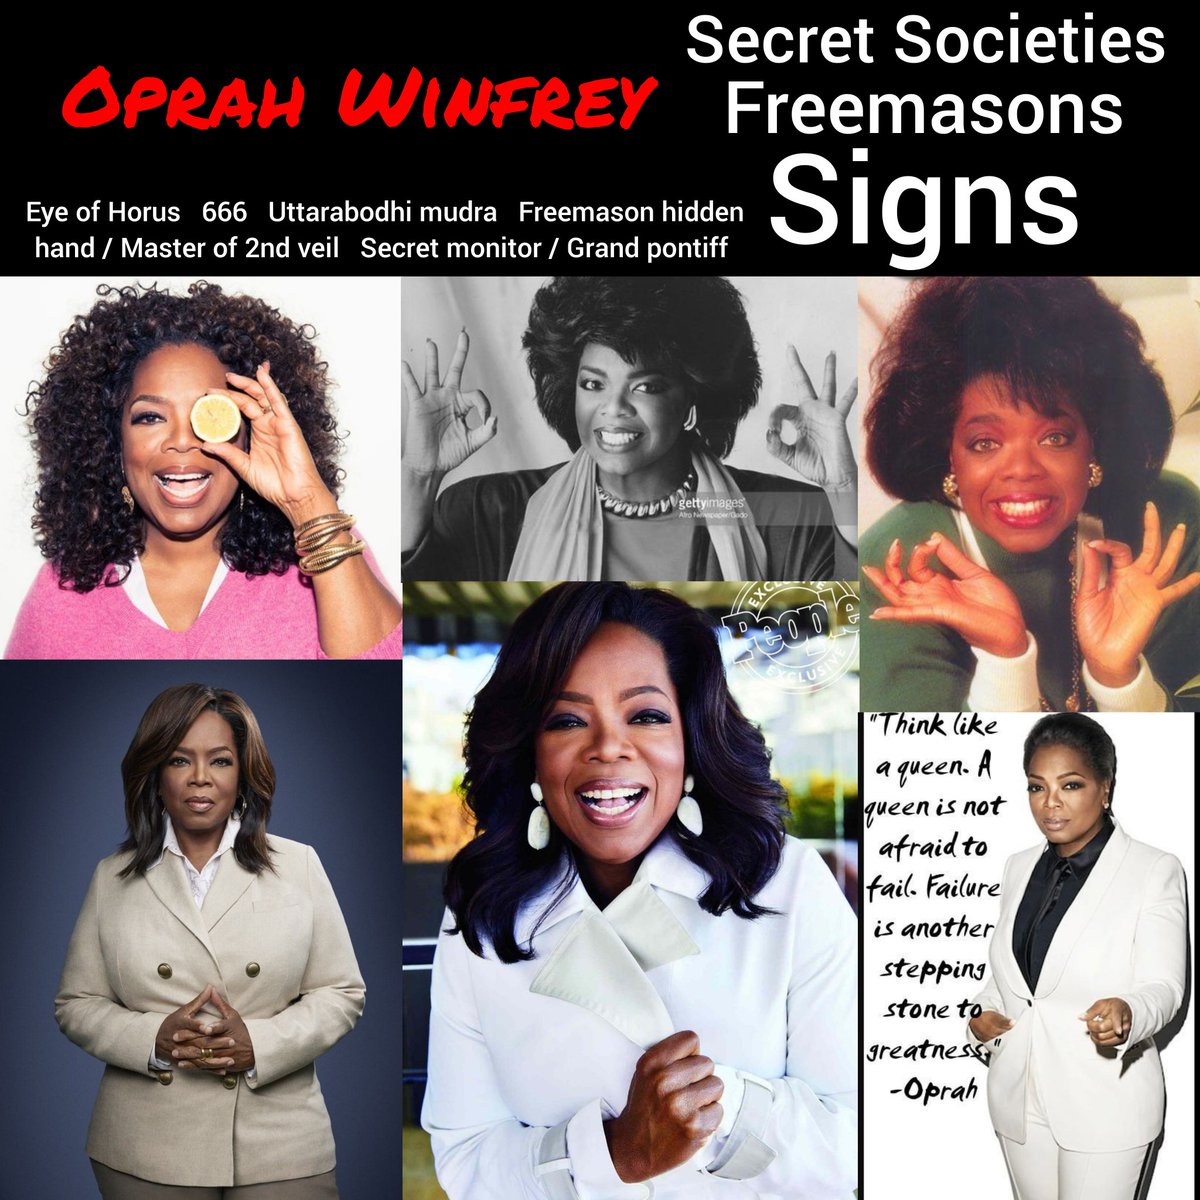 #Freemasonry #SecretSocieties #OprahWinfrey